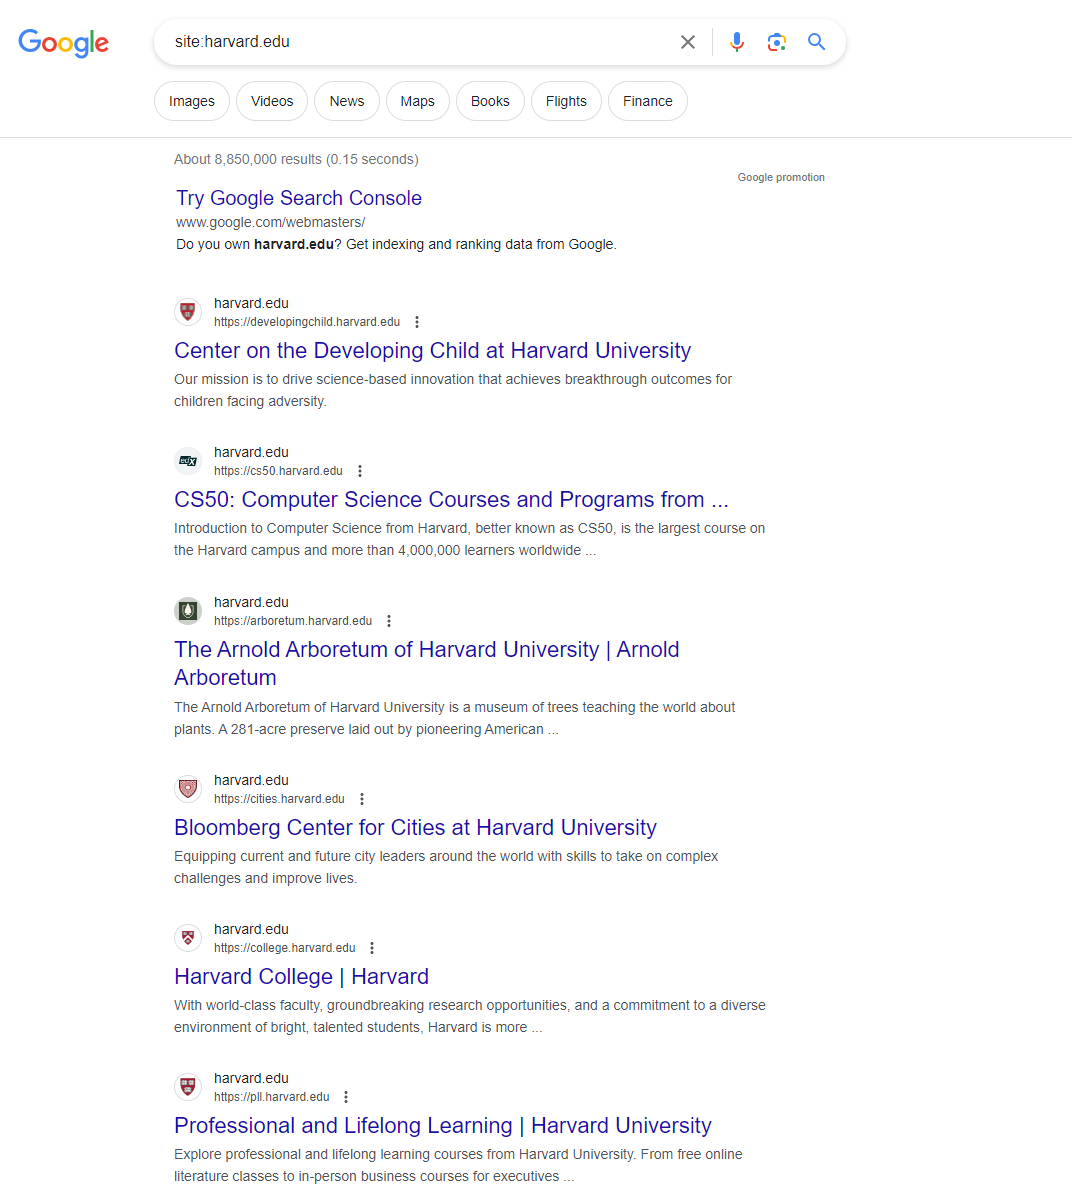  site:harvard.edu search in Google